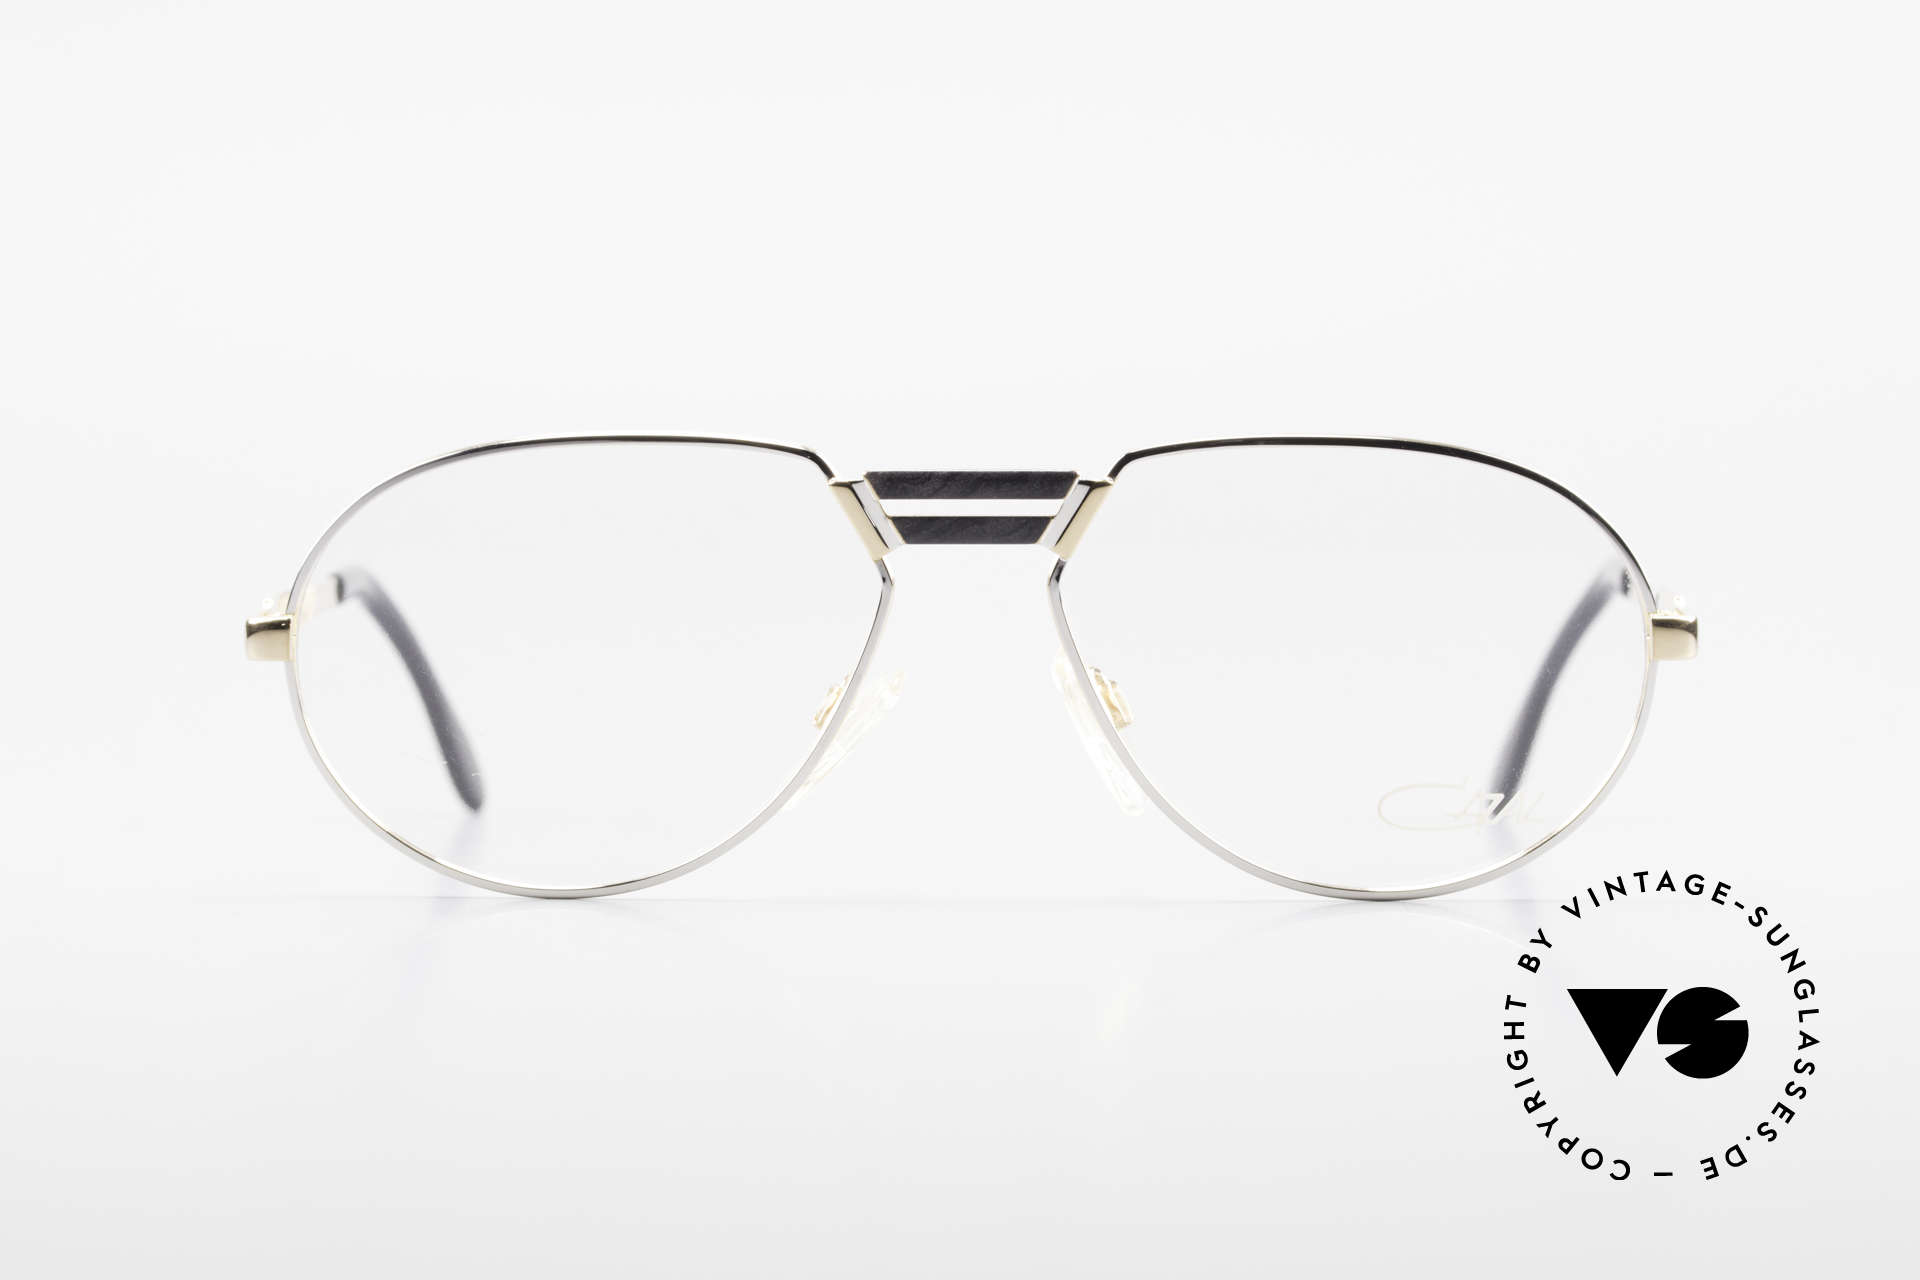 Cazal 739 Gold Plated Eyeglass-Frame, slightly "teardrop shaped" frame by CAri ZALloni, Made for Men